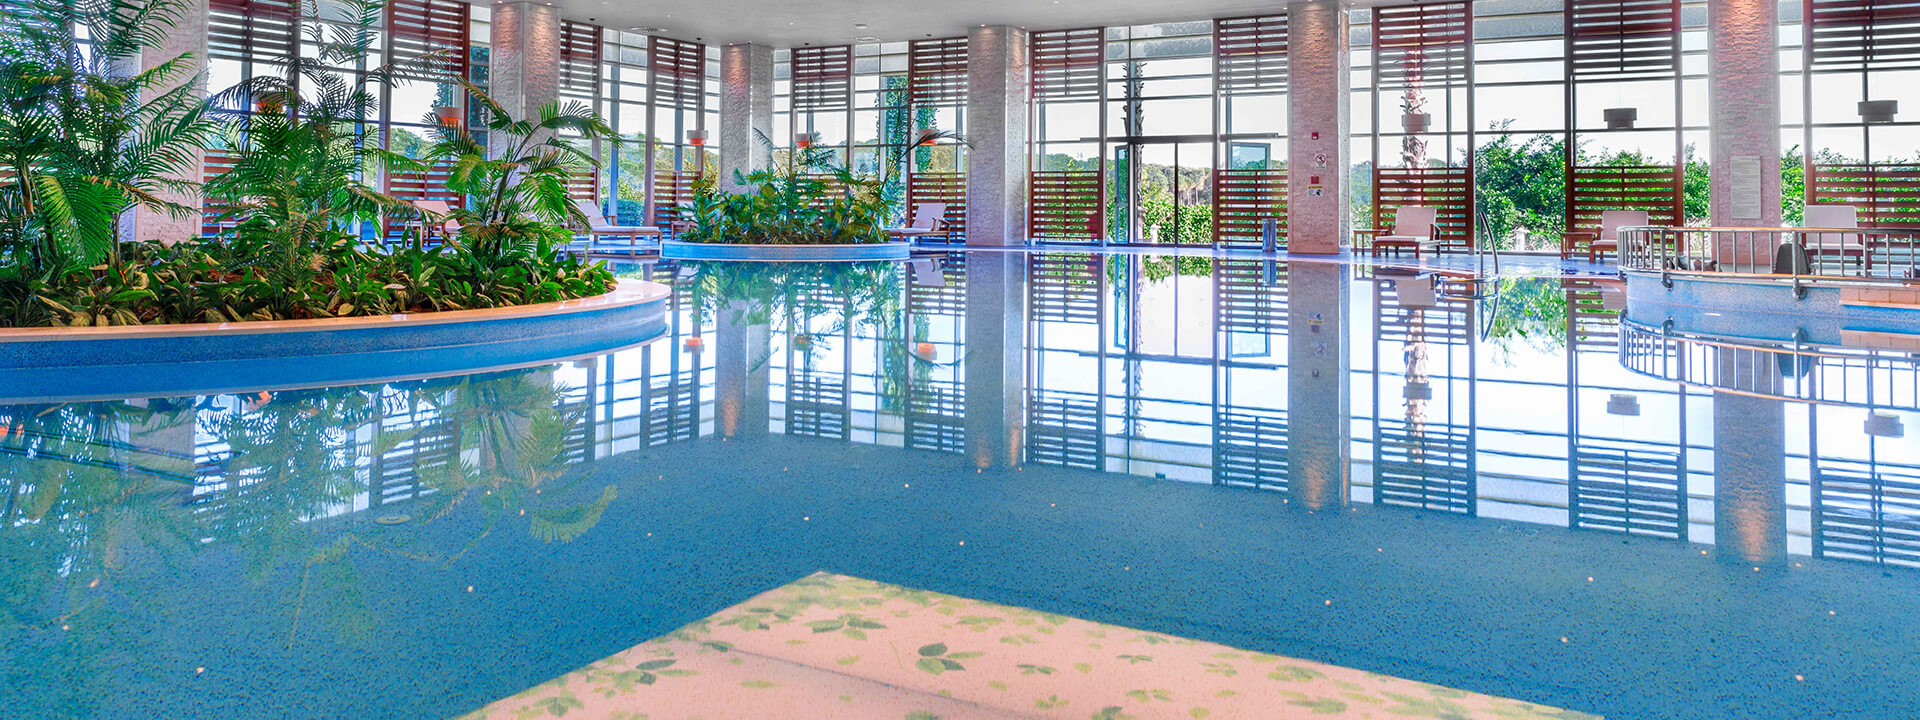 Regnum Carya | Pools | Indoor Spa Pool